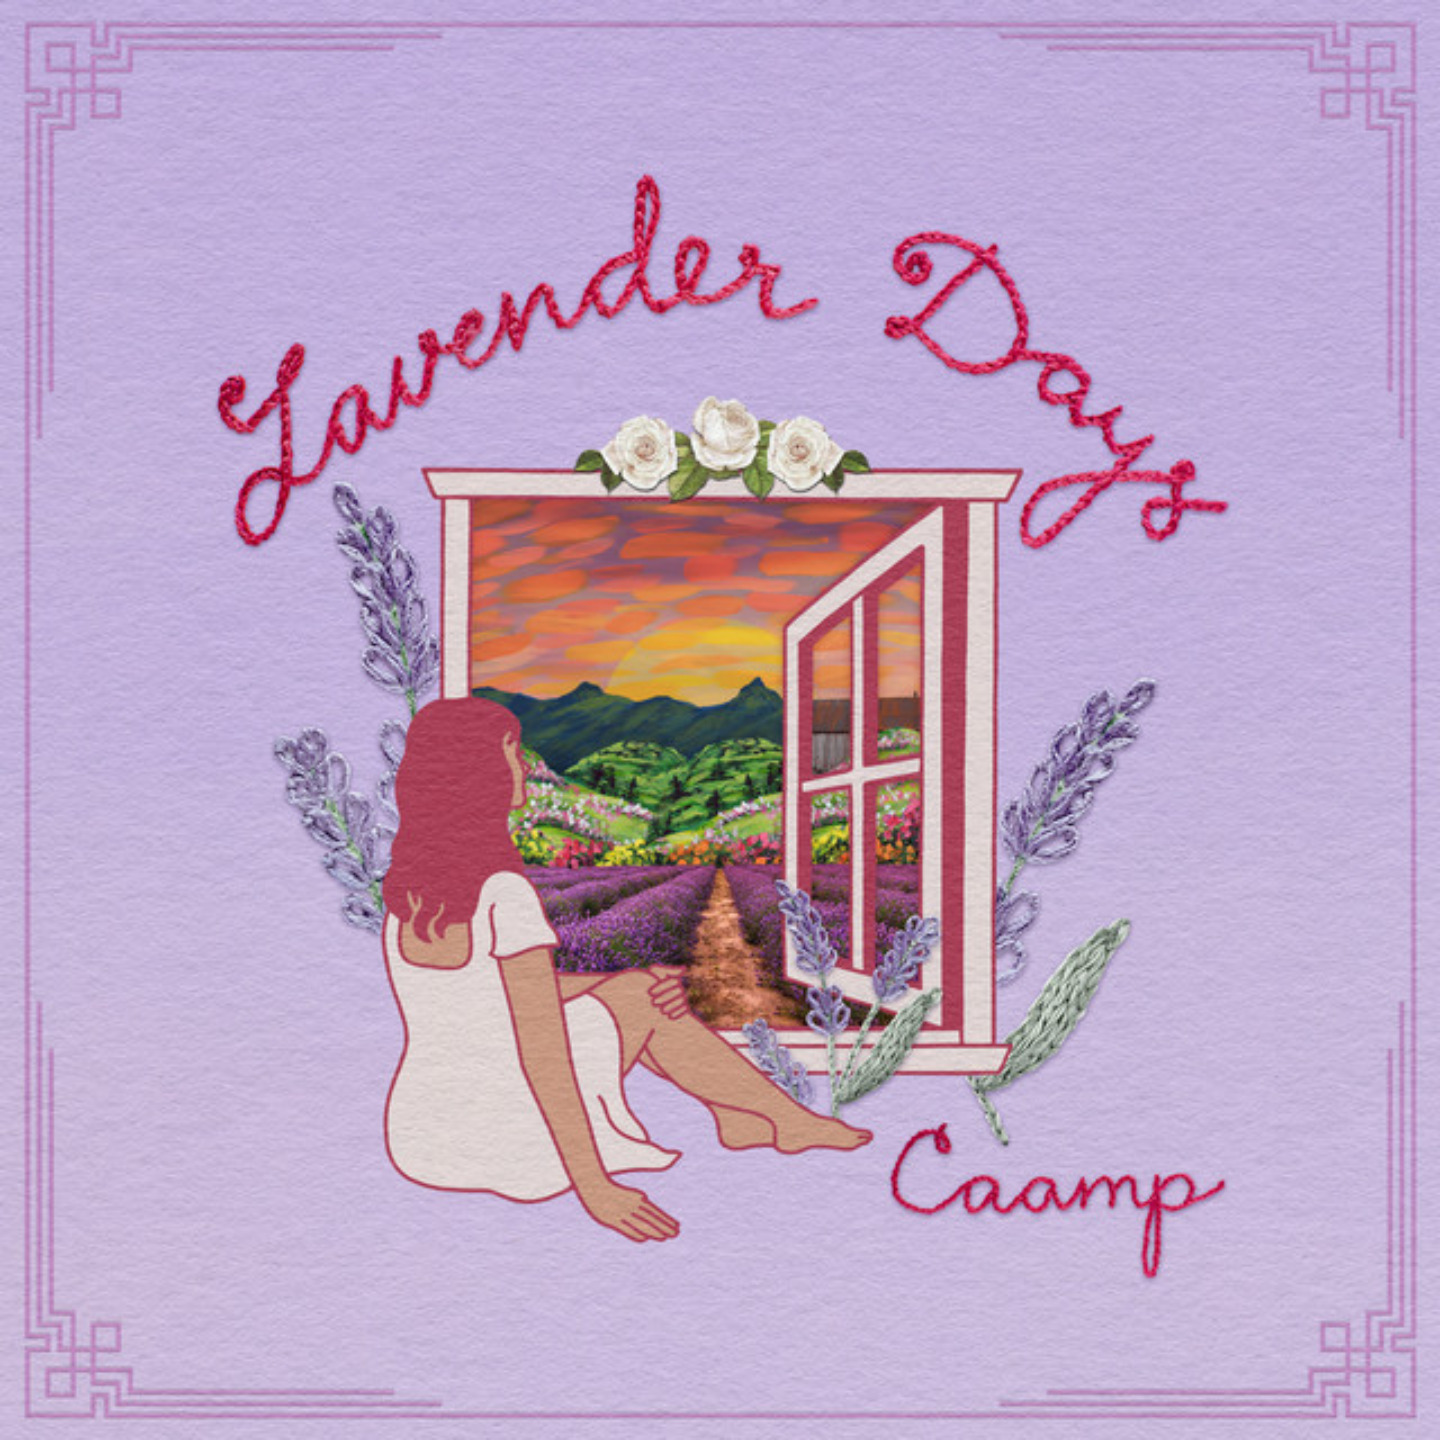 CAAMP - Lavender Days LP Pink And Purple Galaxy Swirl Vinyl